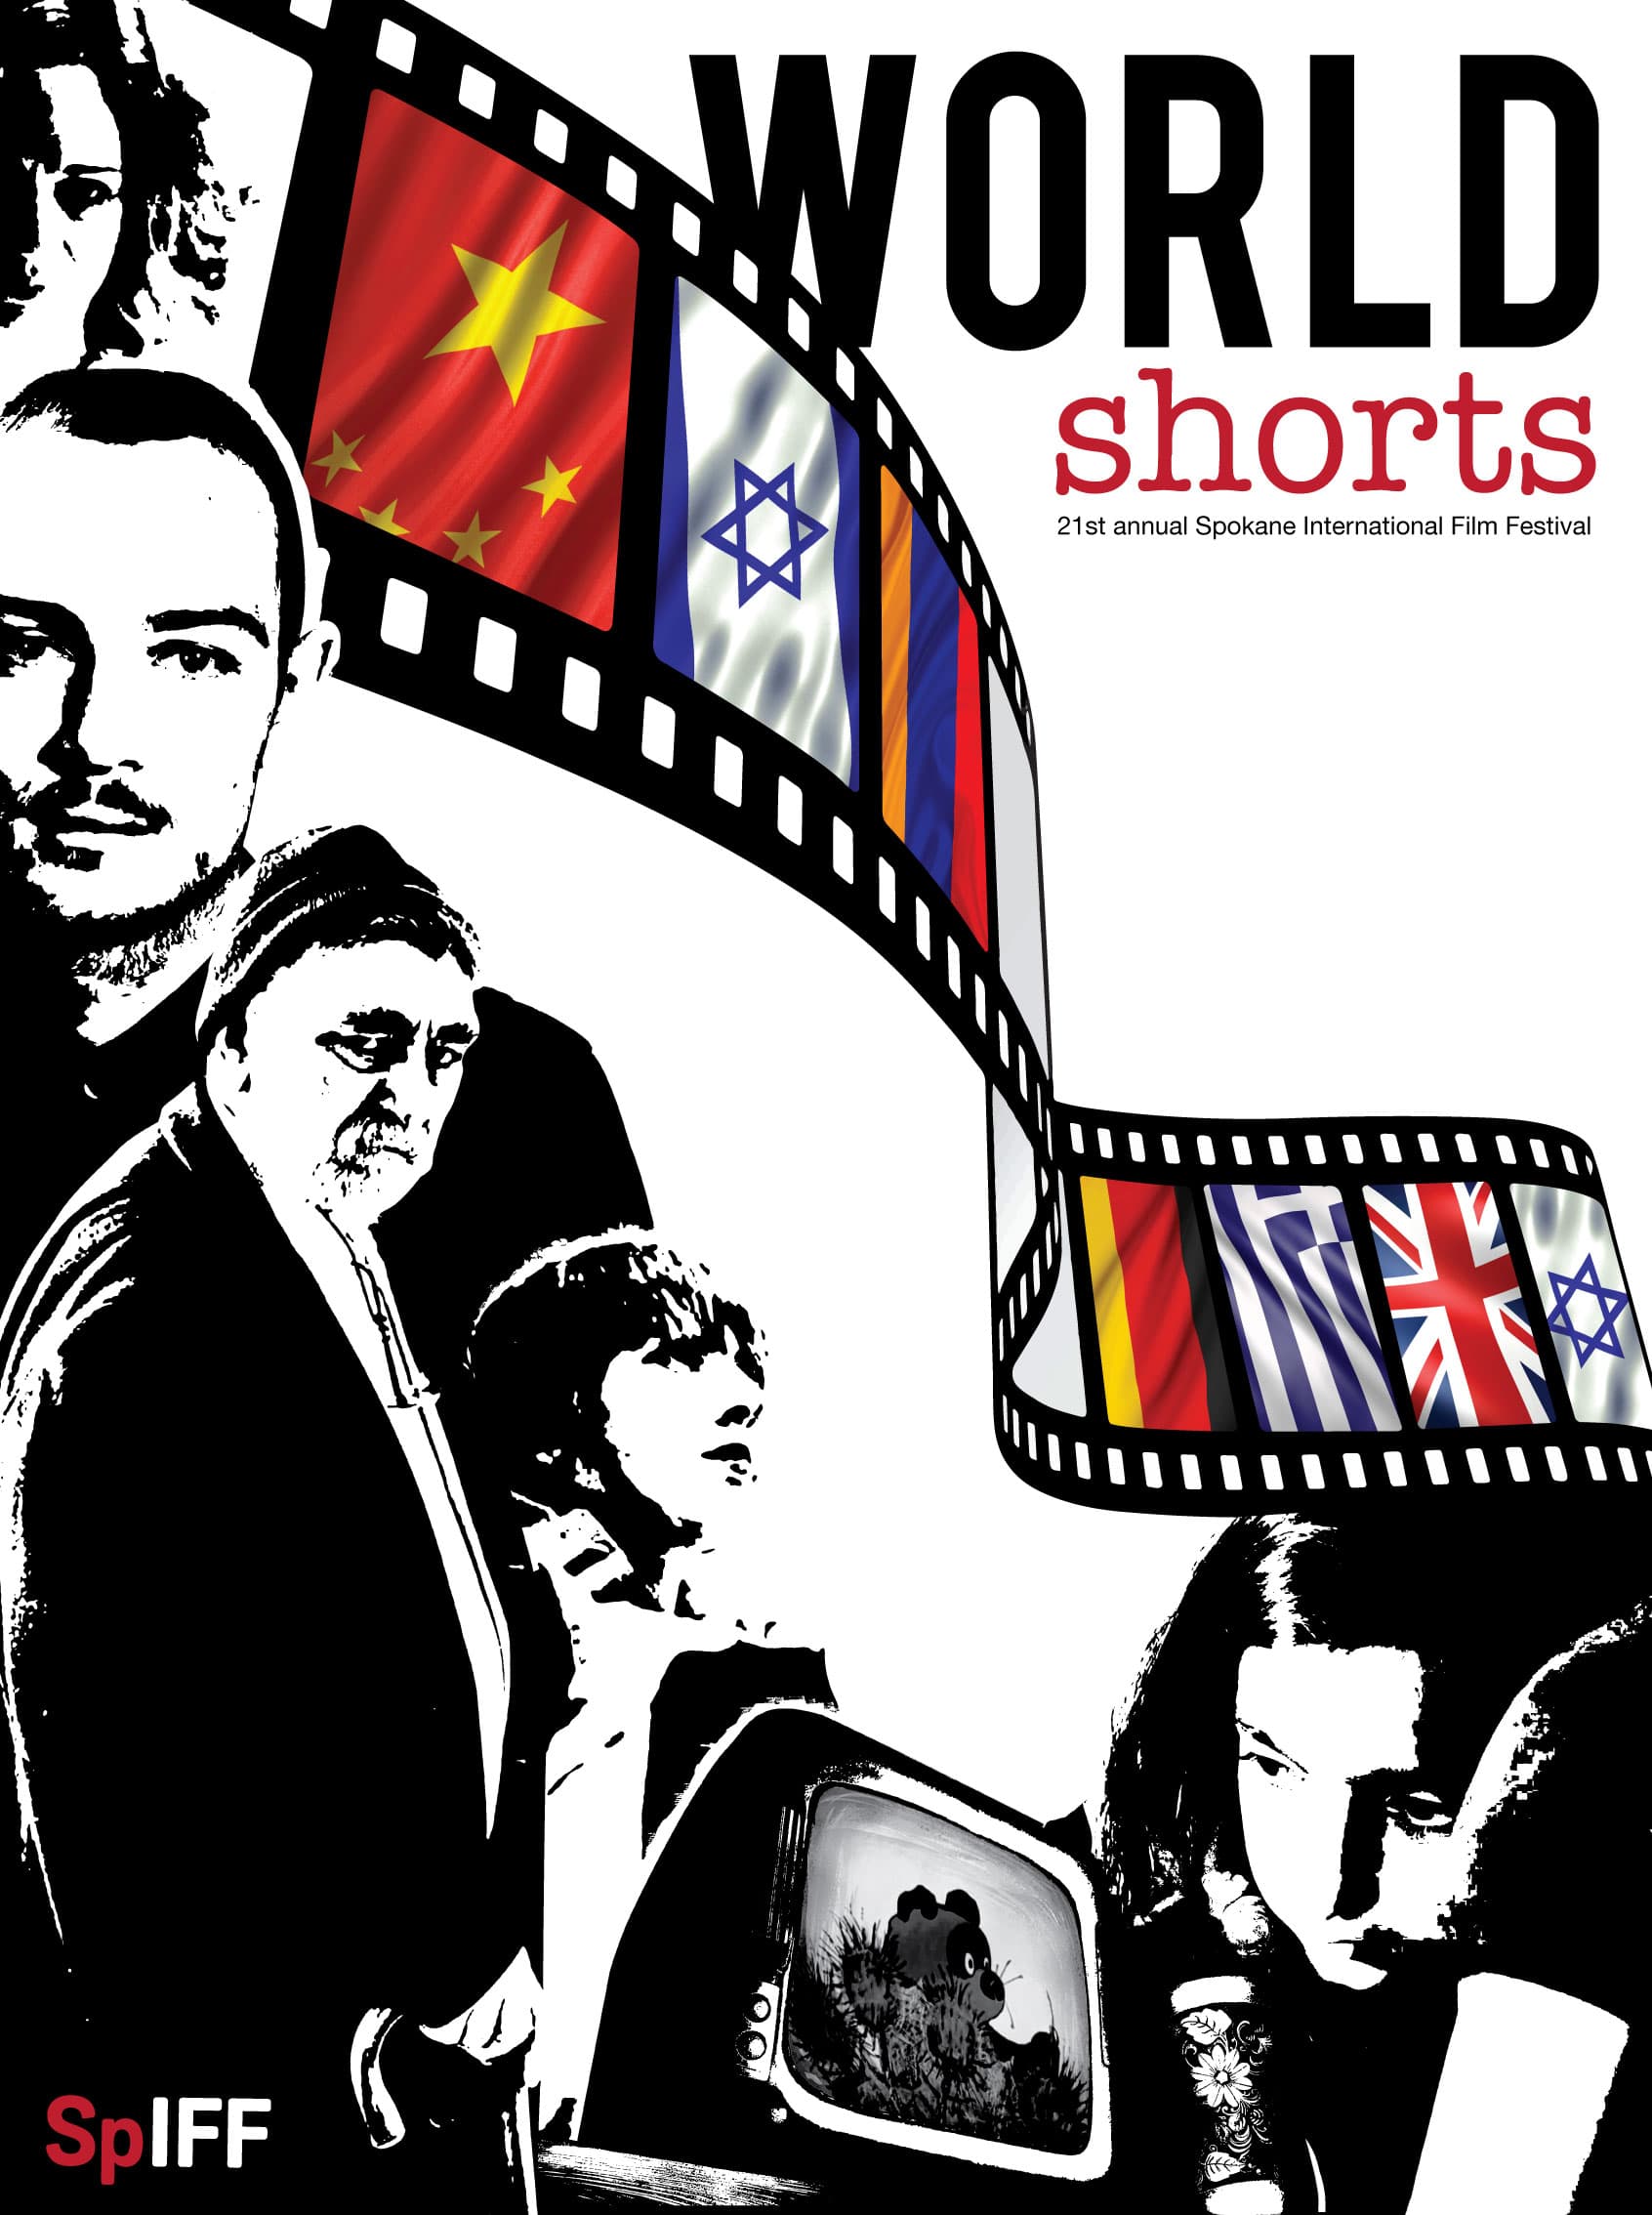 Spiff World Shorts poster by Kallie Khademi.